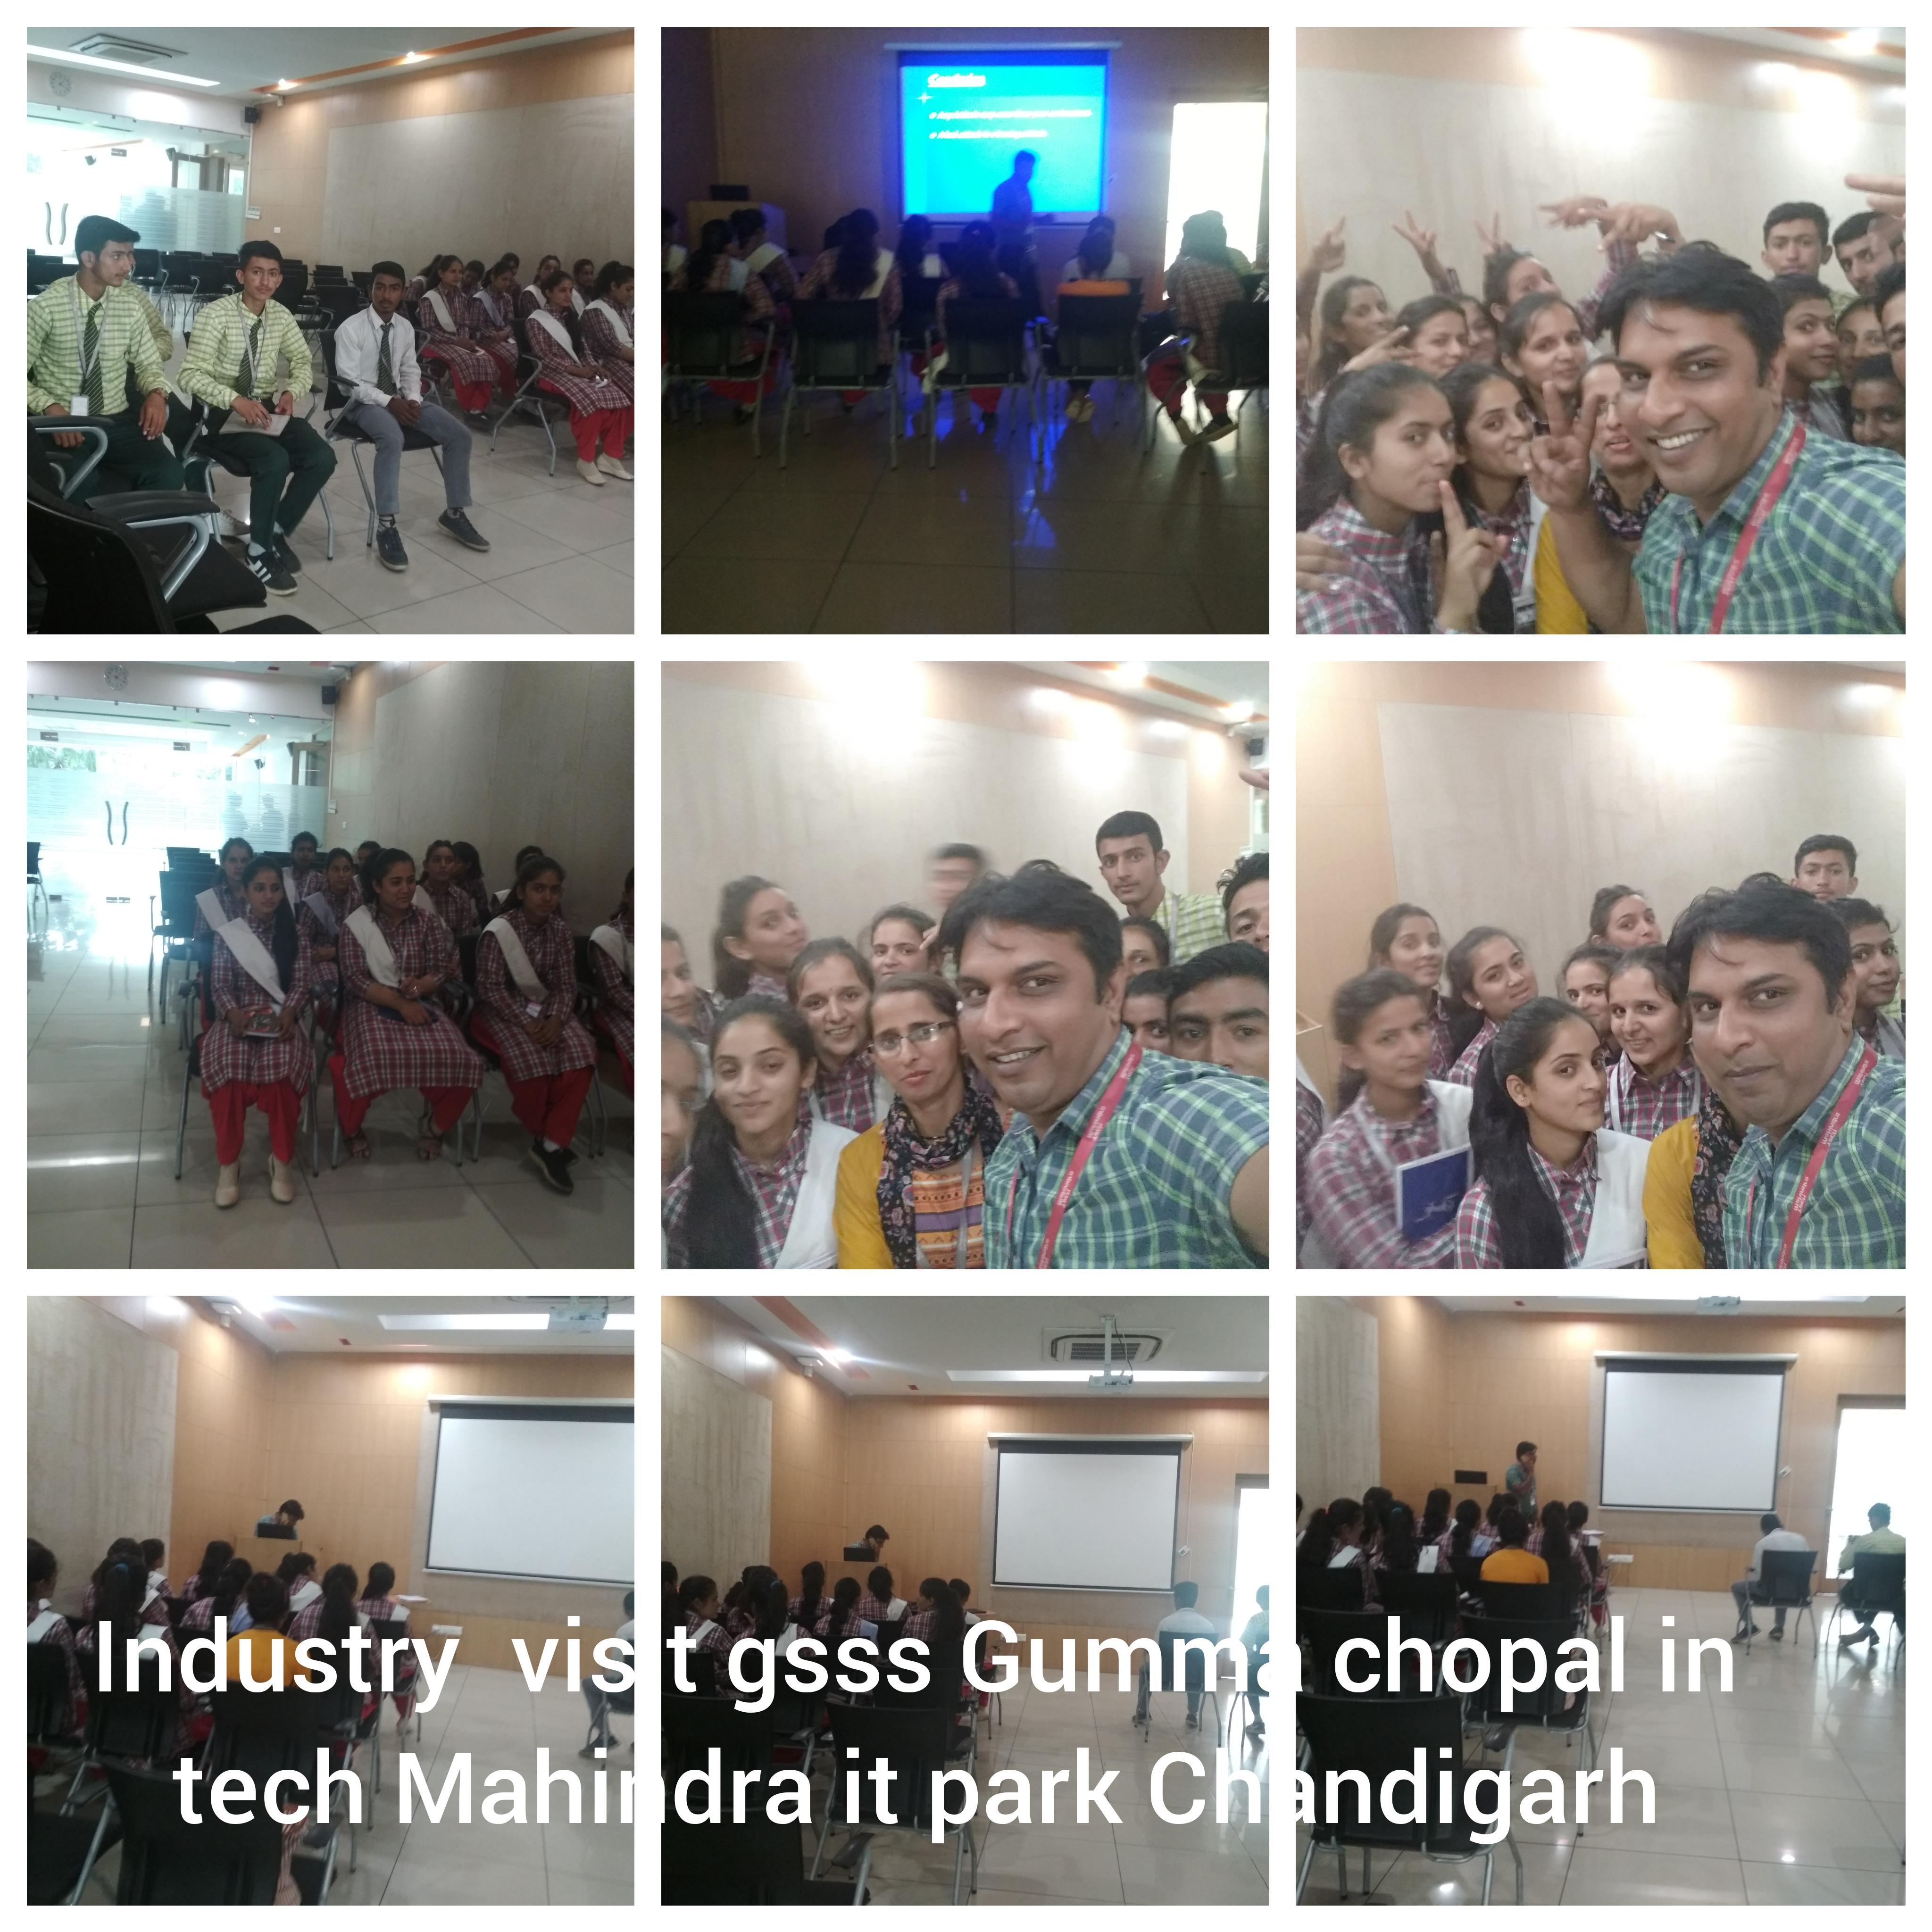 tech mahindra it park chandigarh